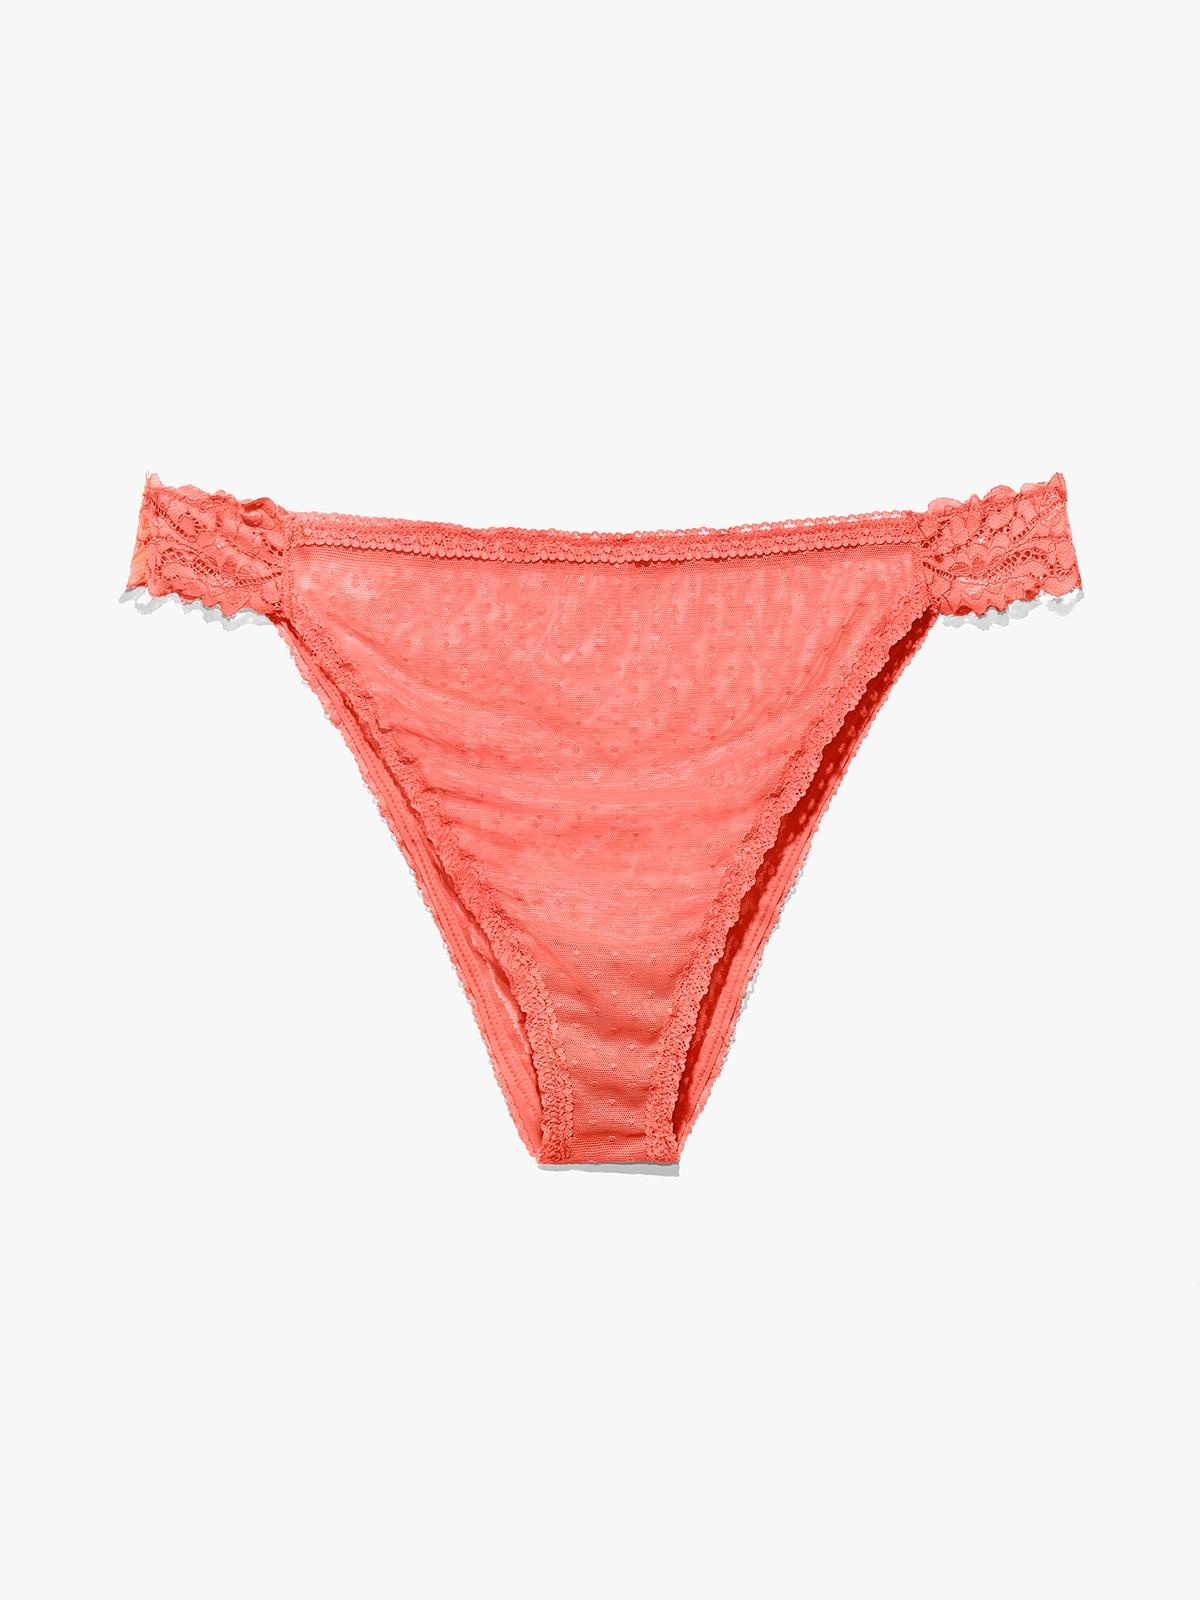 New Victoria's Secret Women's Cheeky Panties Underwear Size Small Peach Lace